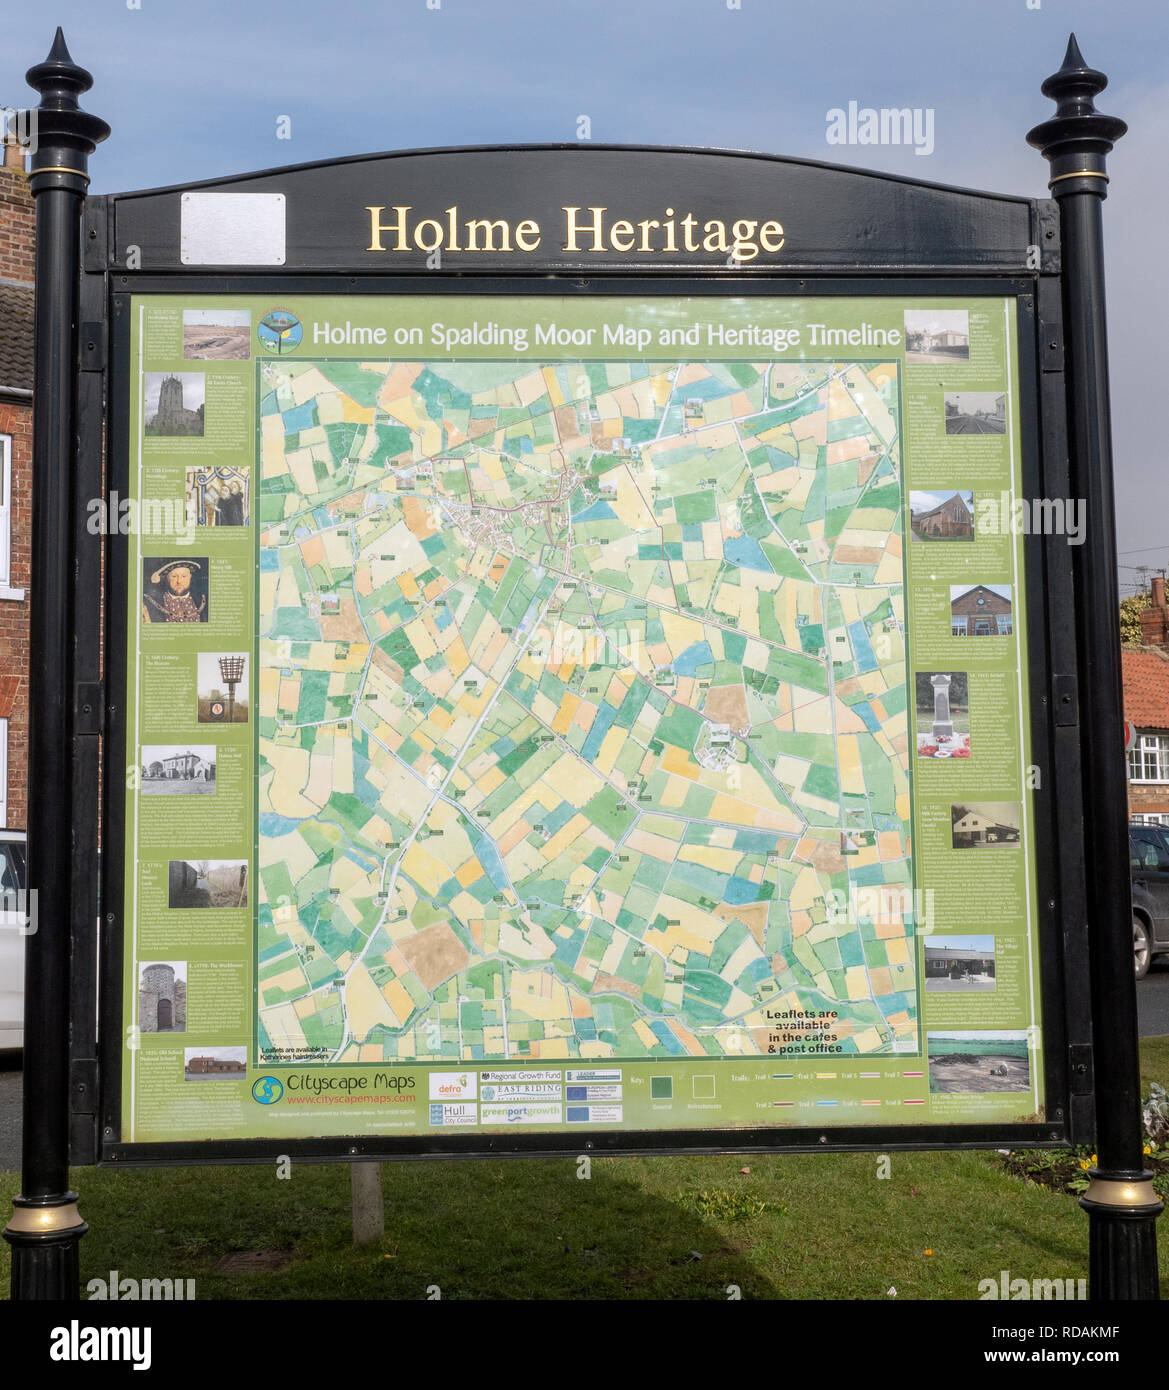 Heritage Information Karte für Touristen in Holme on Spalding Moor, Yorkshire, England, UK. Stockfoto